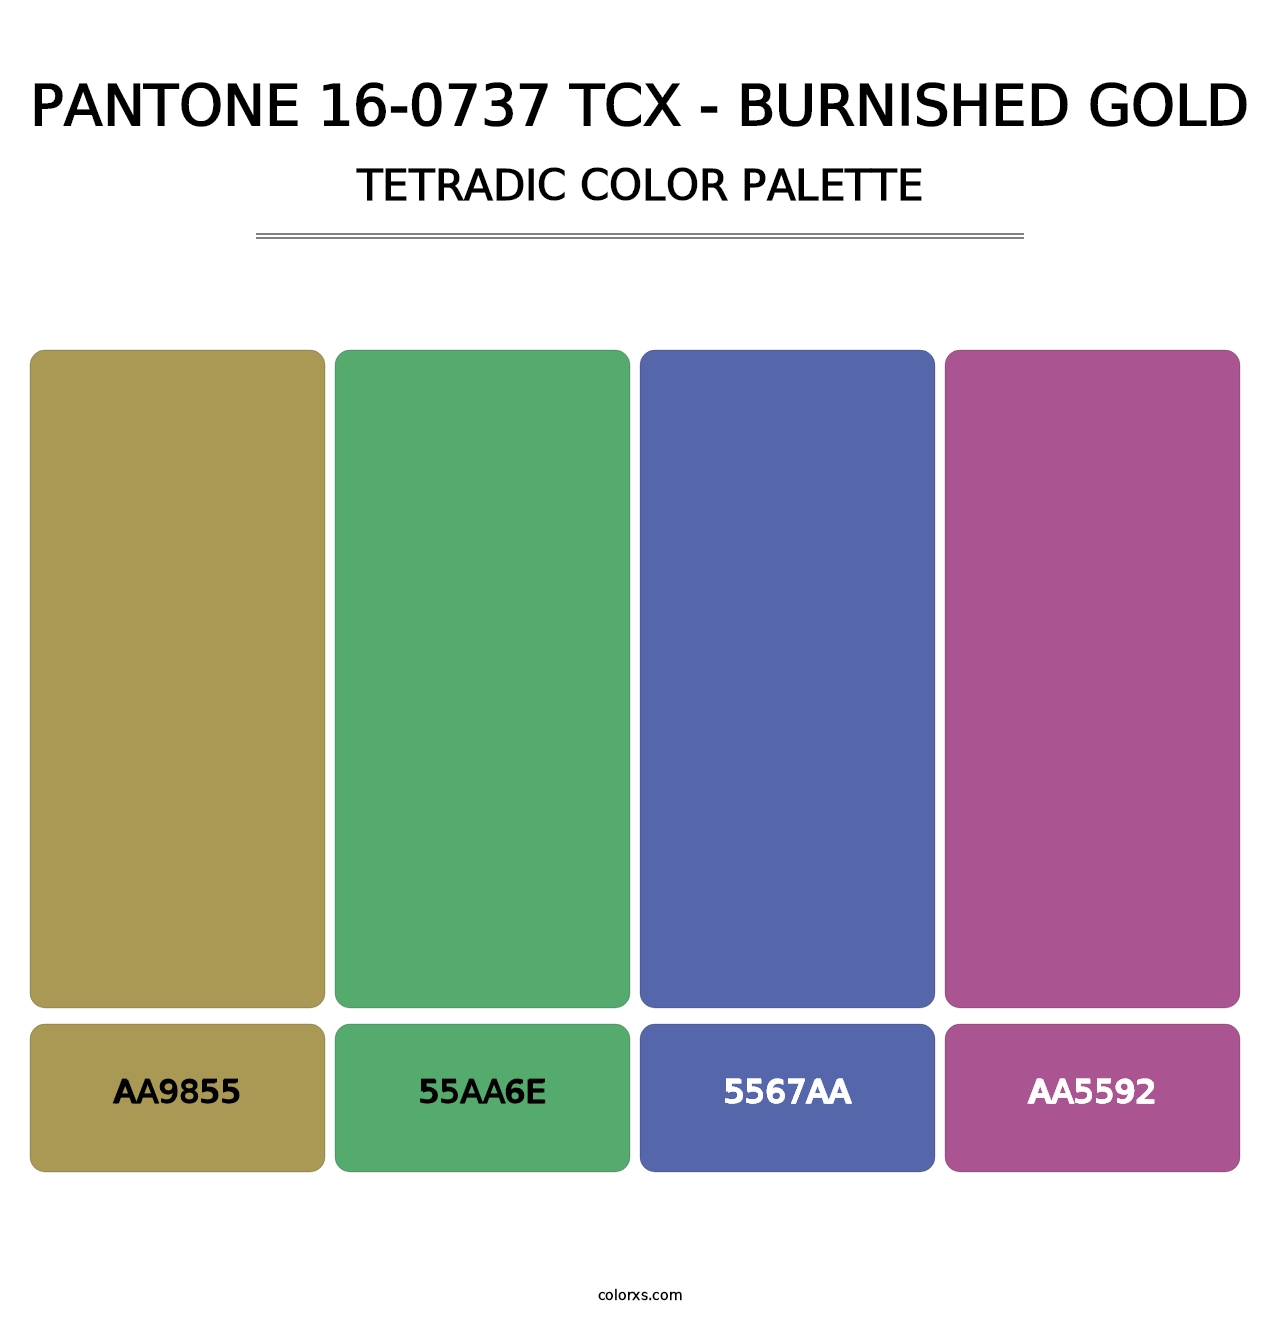 PANTONE 16-0737 TCX - Burnished Gold - Tetradic Color Palette